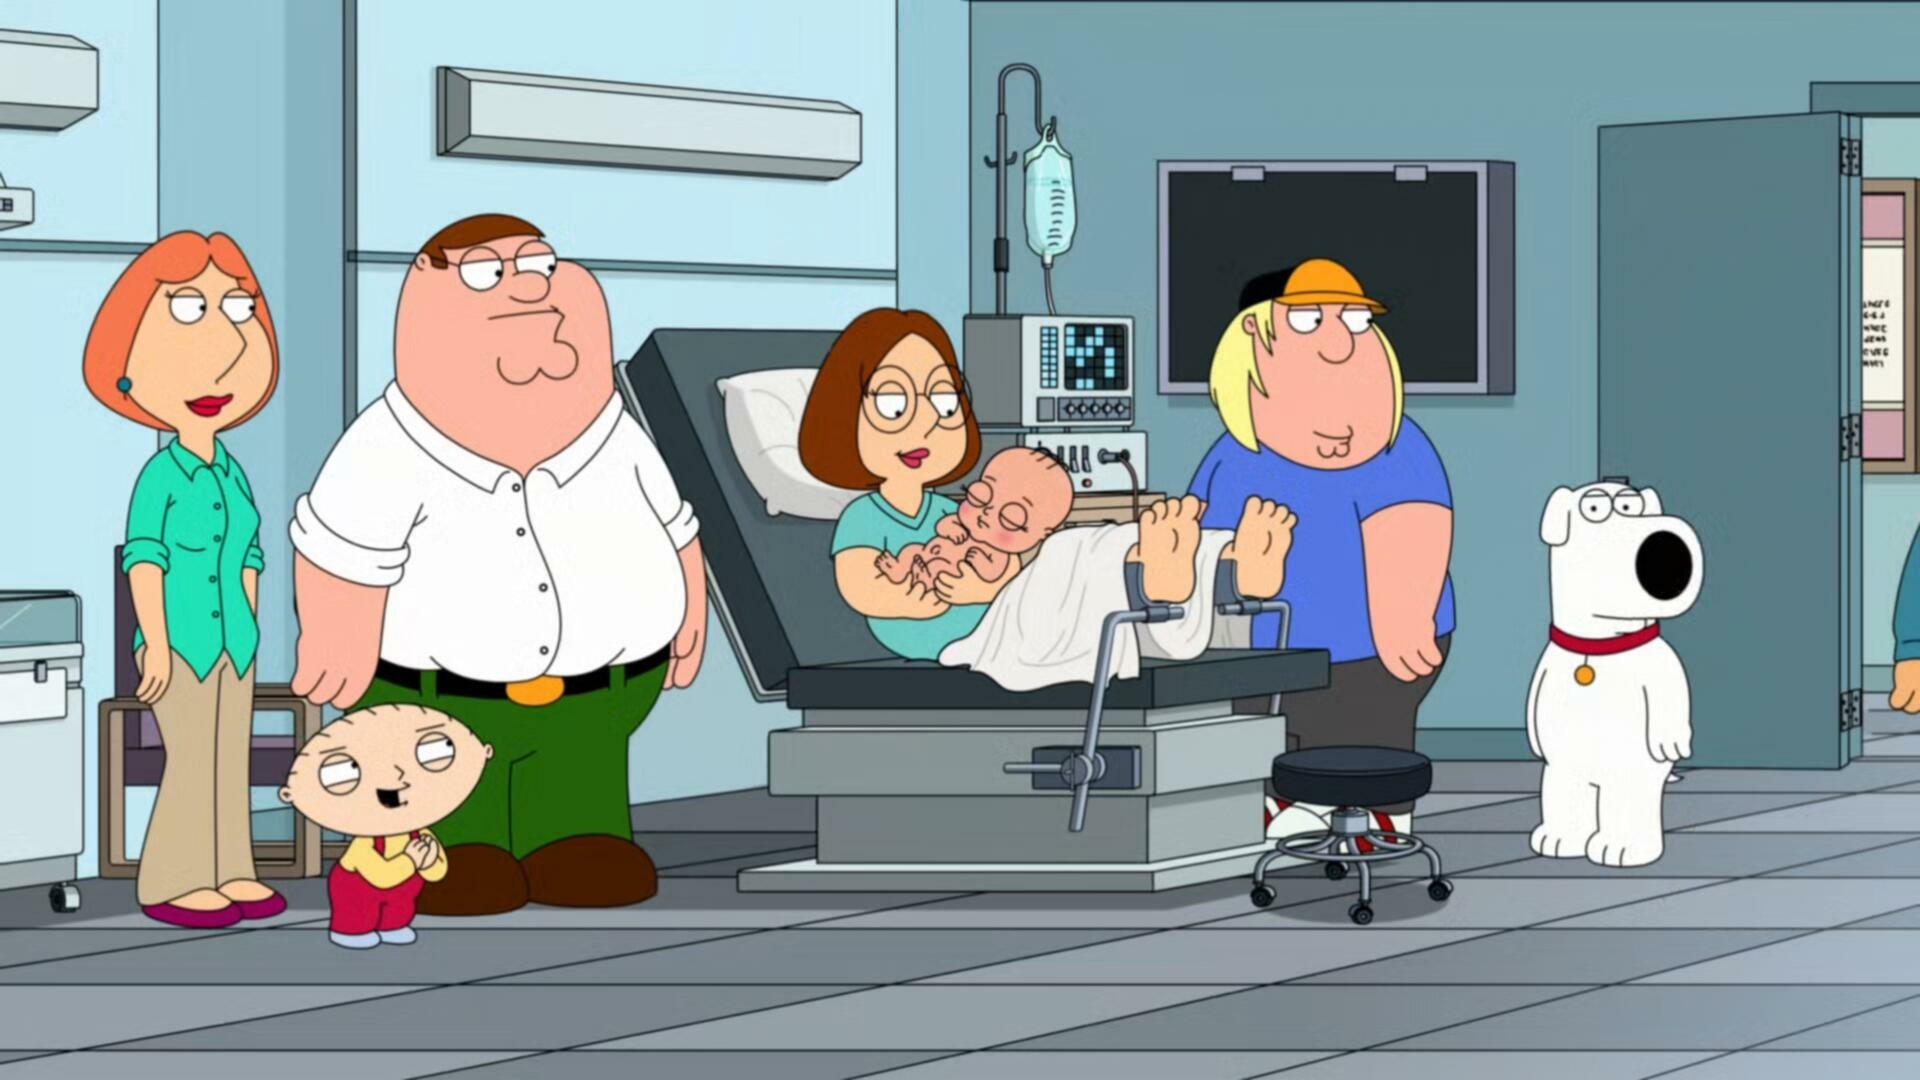 Family Guy S22E01 1080p HEVC x265 MeGusta TGx